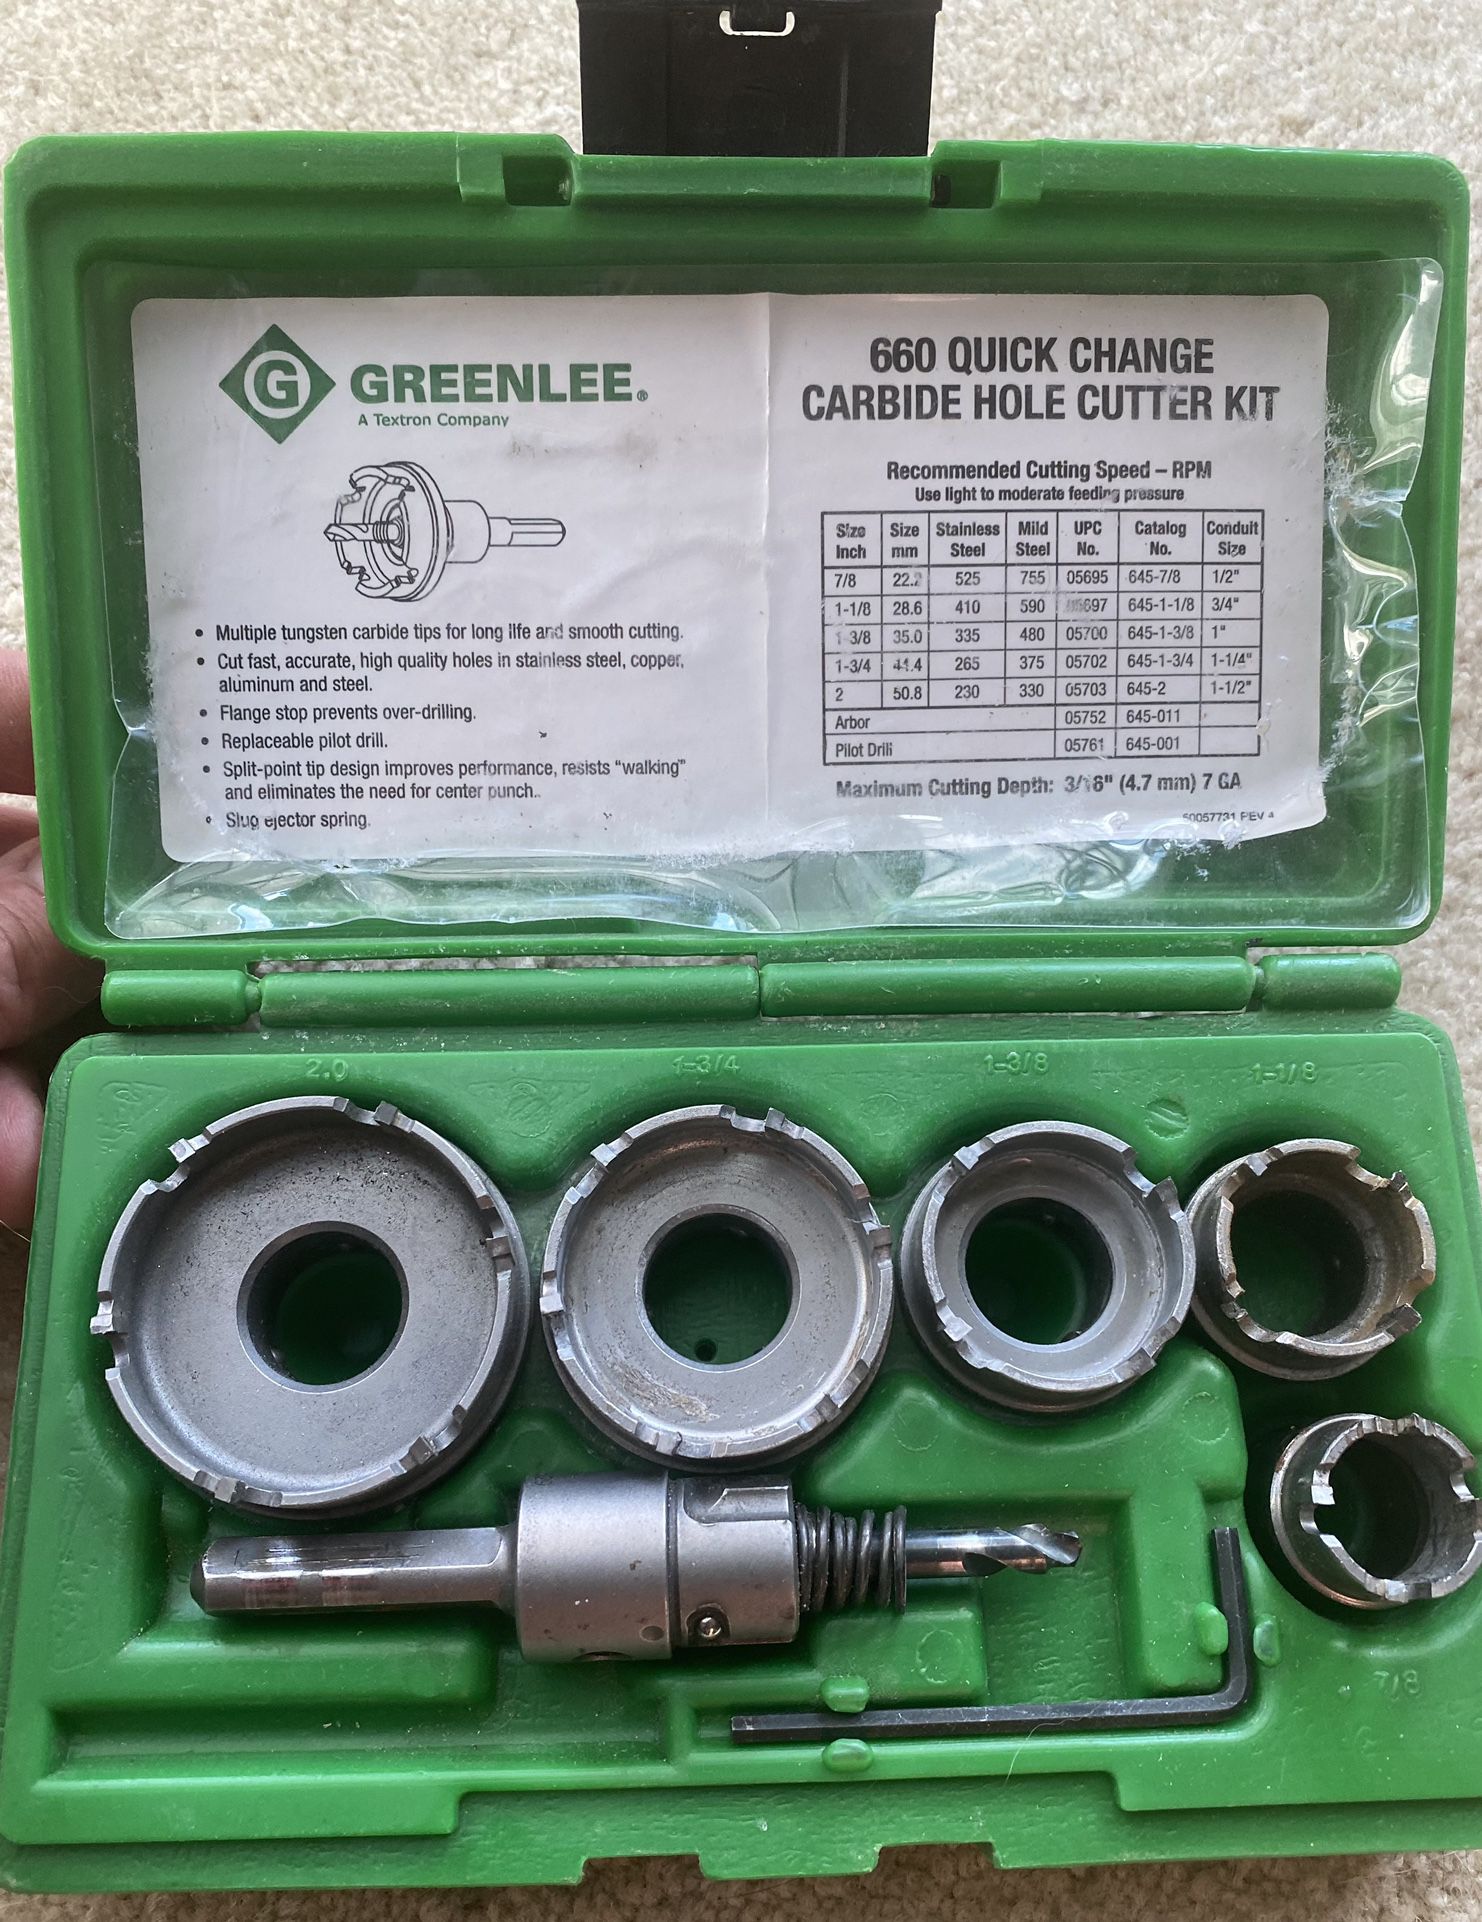 Greenlee 660 Quick Change Carbide Hole Cutter Kit